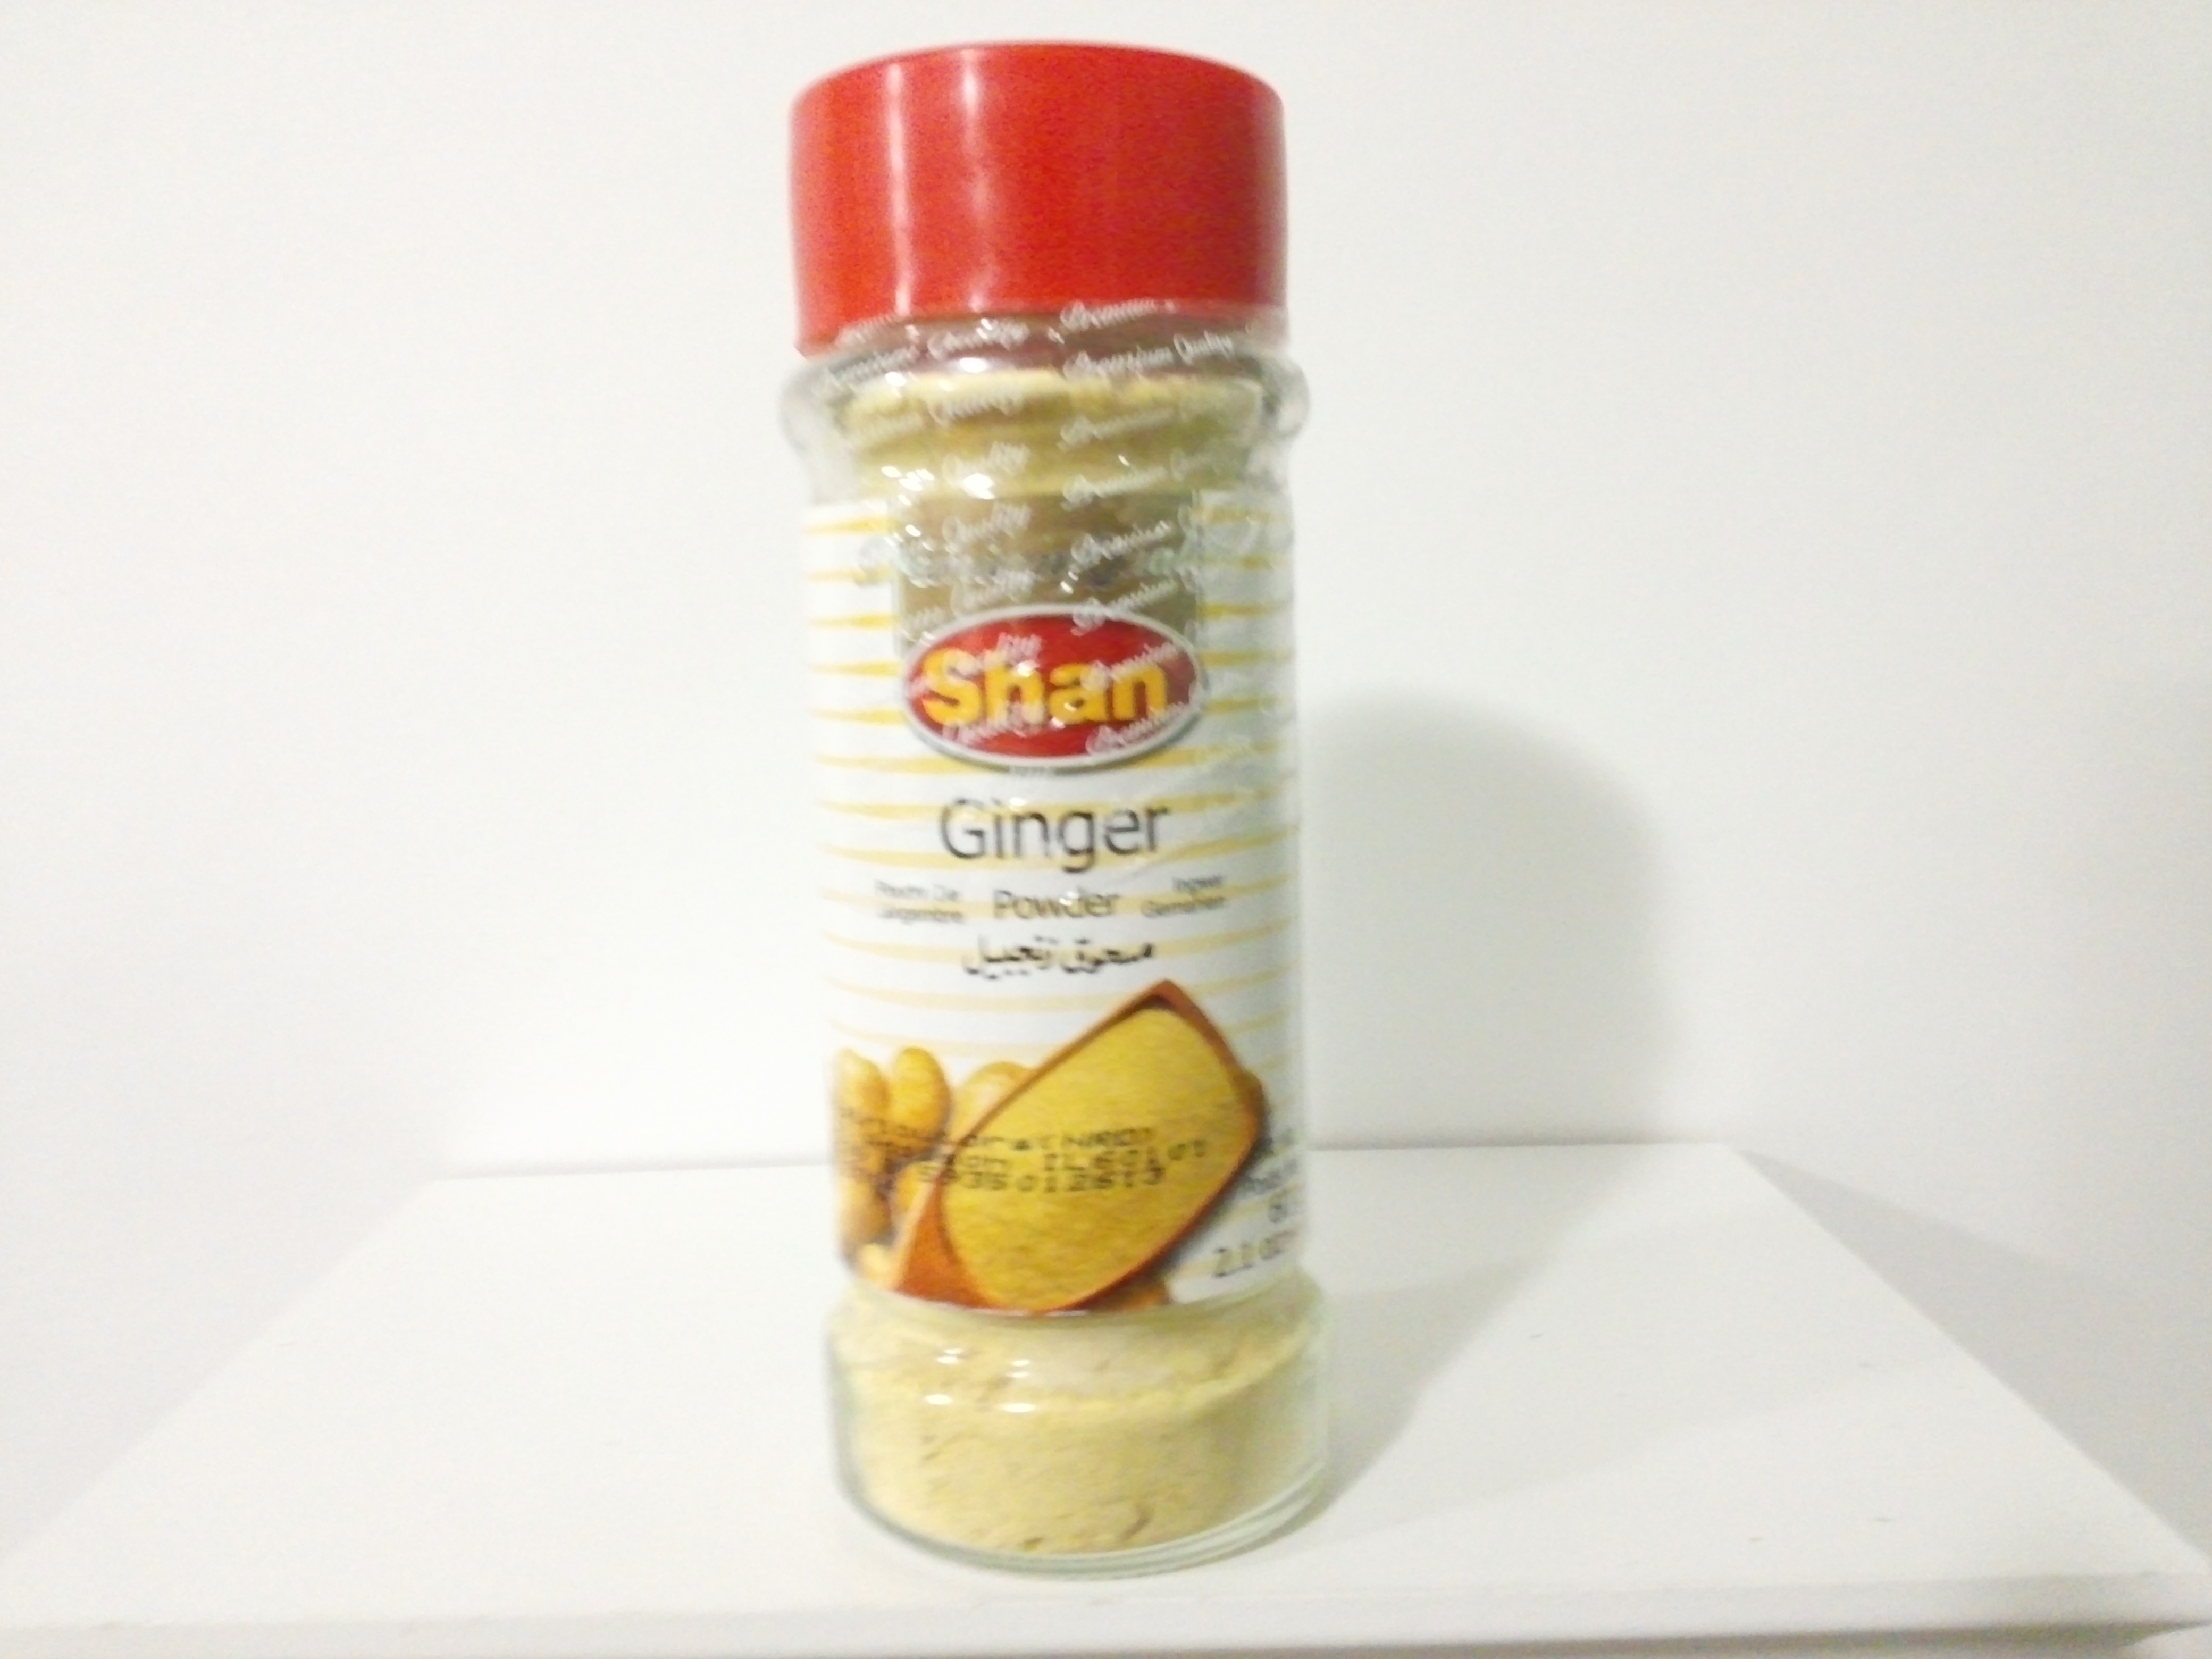 Shan Shaker-Ginger Powder 60 grm  